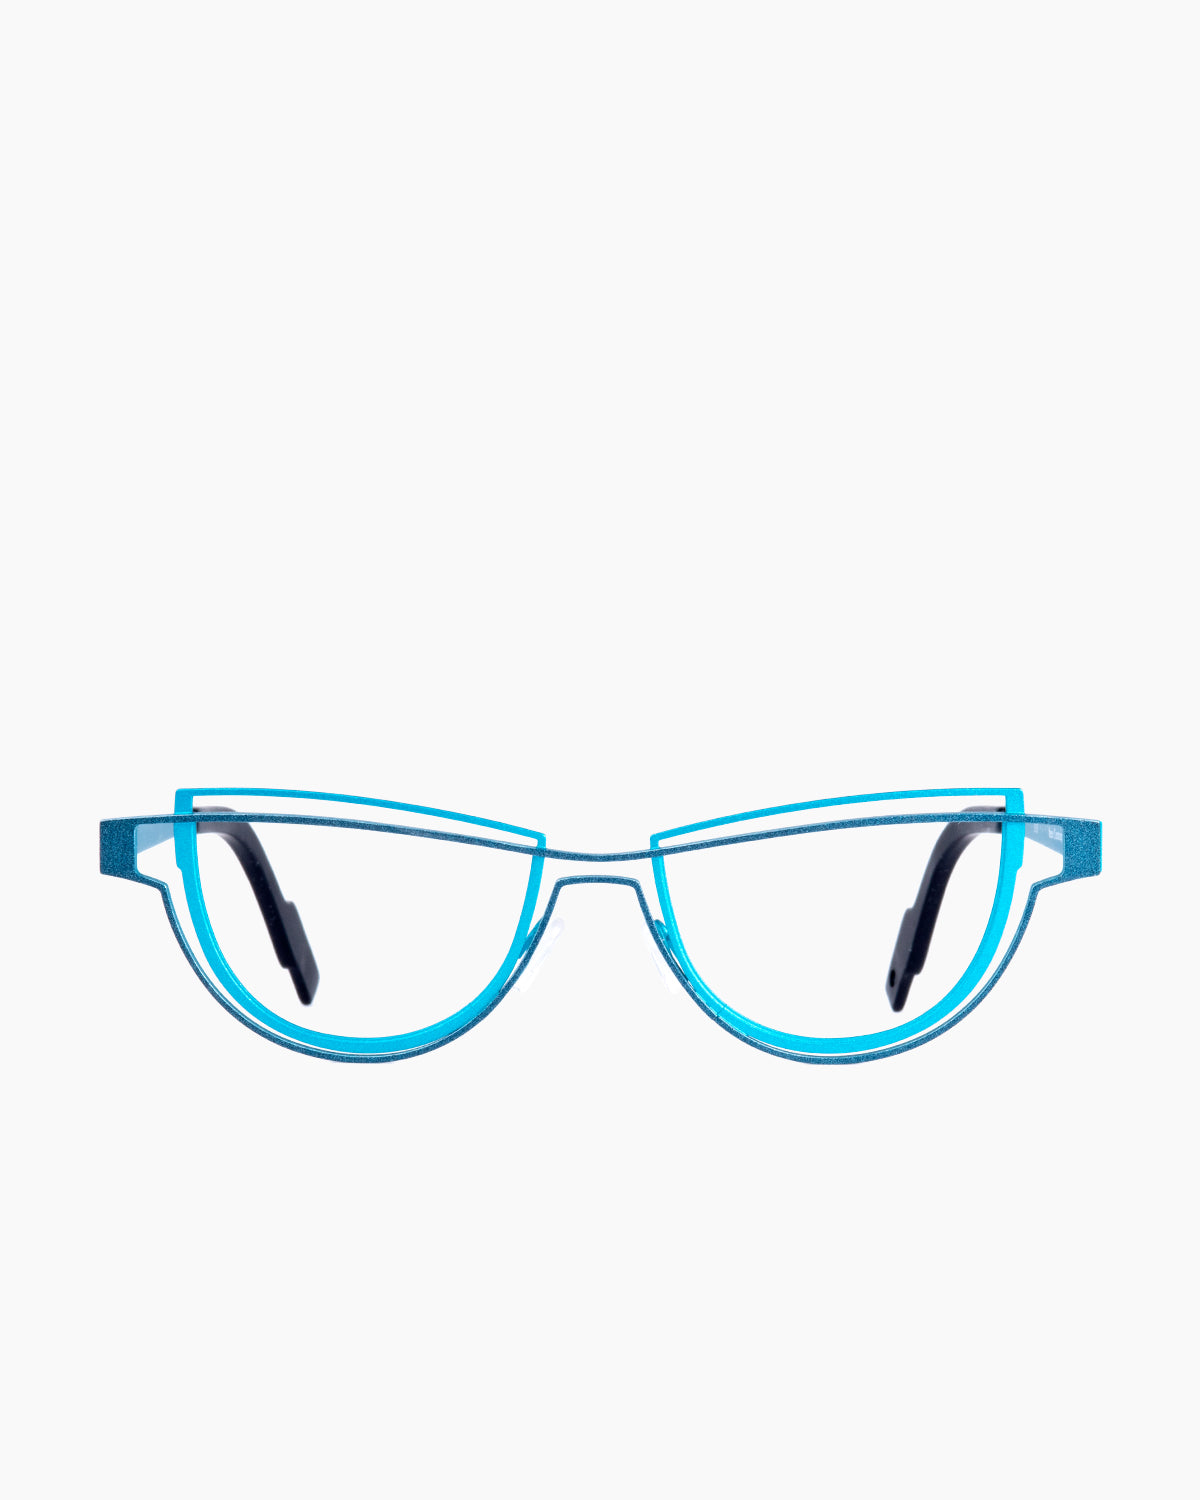 Theo - OUTLINE - 313 | glasses bar